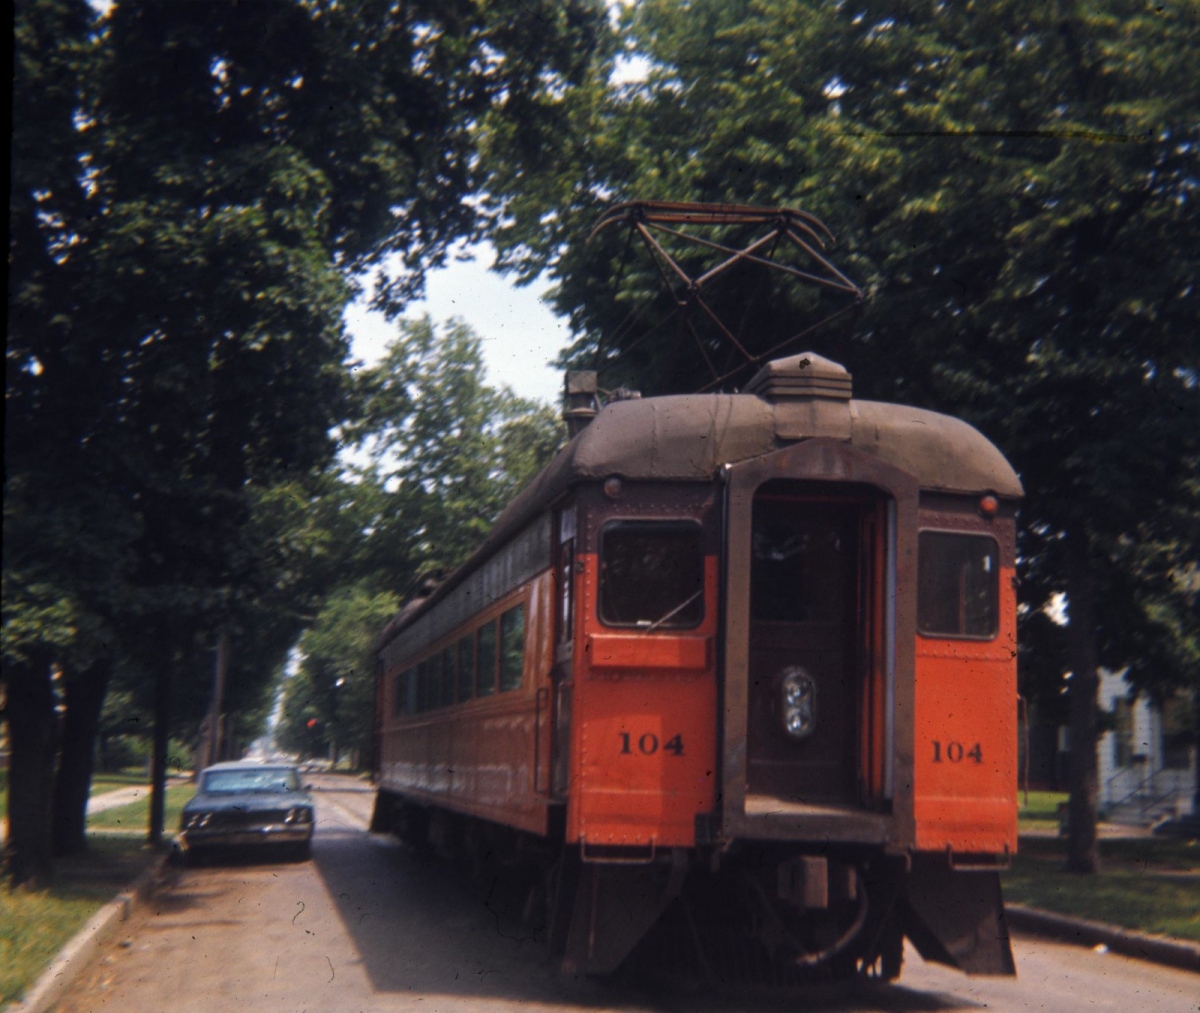 Мичиган-Сити — Chicago South Shore & South Bend Railroad — South Shore Line